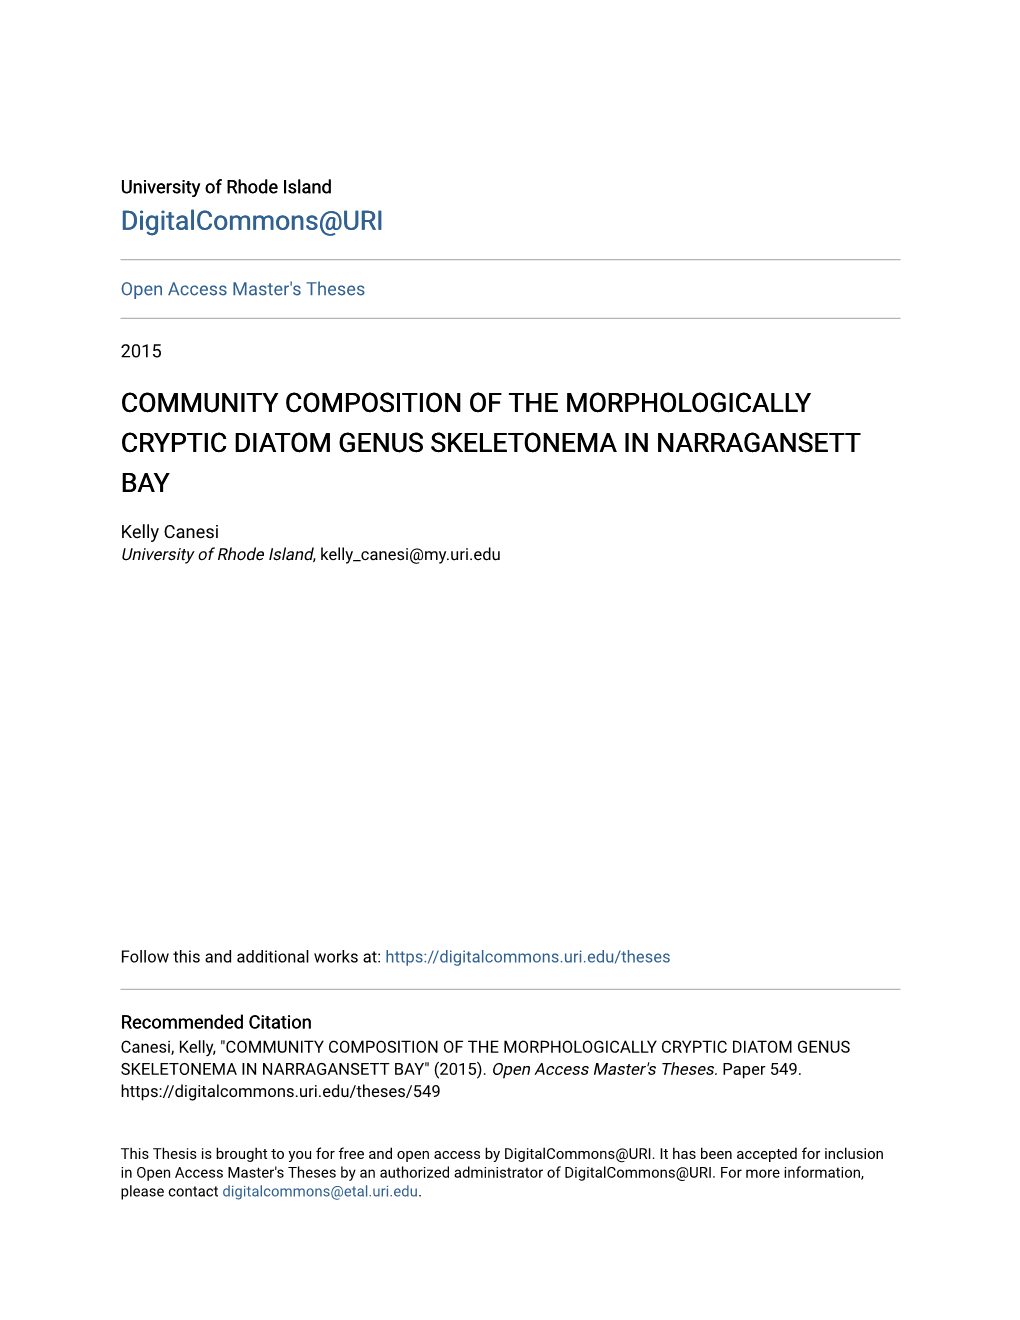 Community Composition of the Morphologically Cryptic Diatom Genus Skeletonema in Narragansett Bay